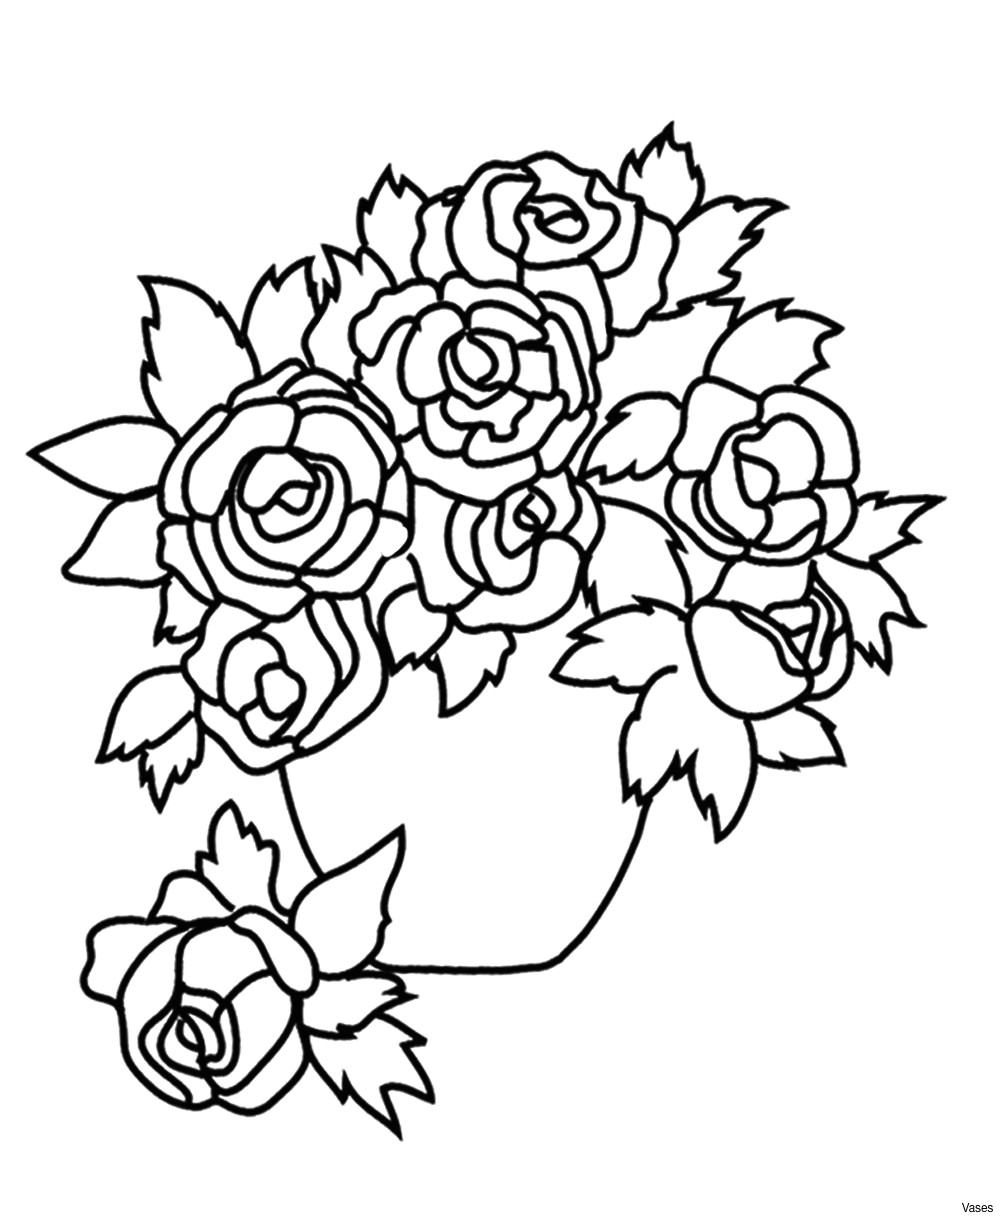 Drawings Of Roses In Color Rose Flower Vase to Color Www tollebild Com